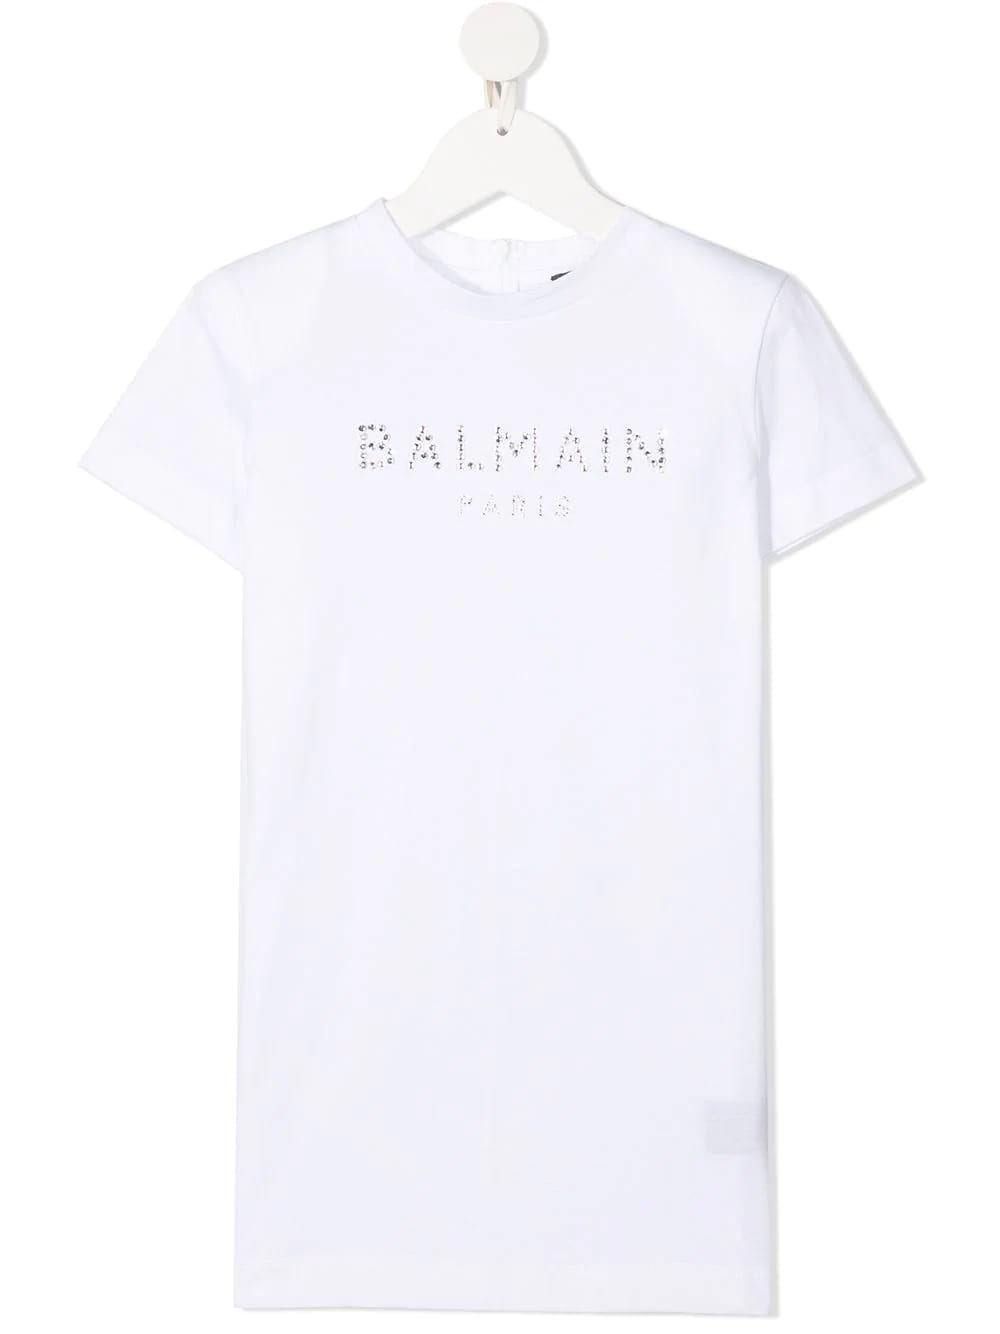 Balmain Kid White Maxi T-shirt Dress With Starss Logo